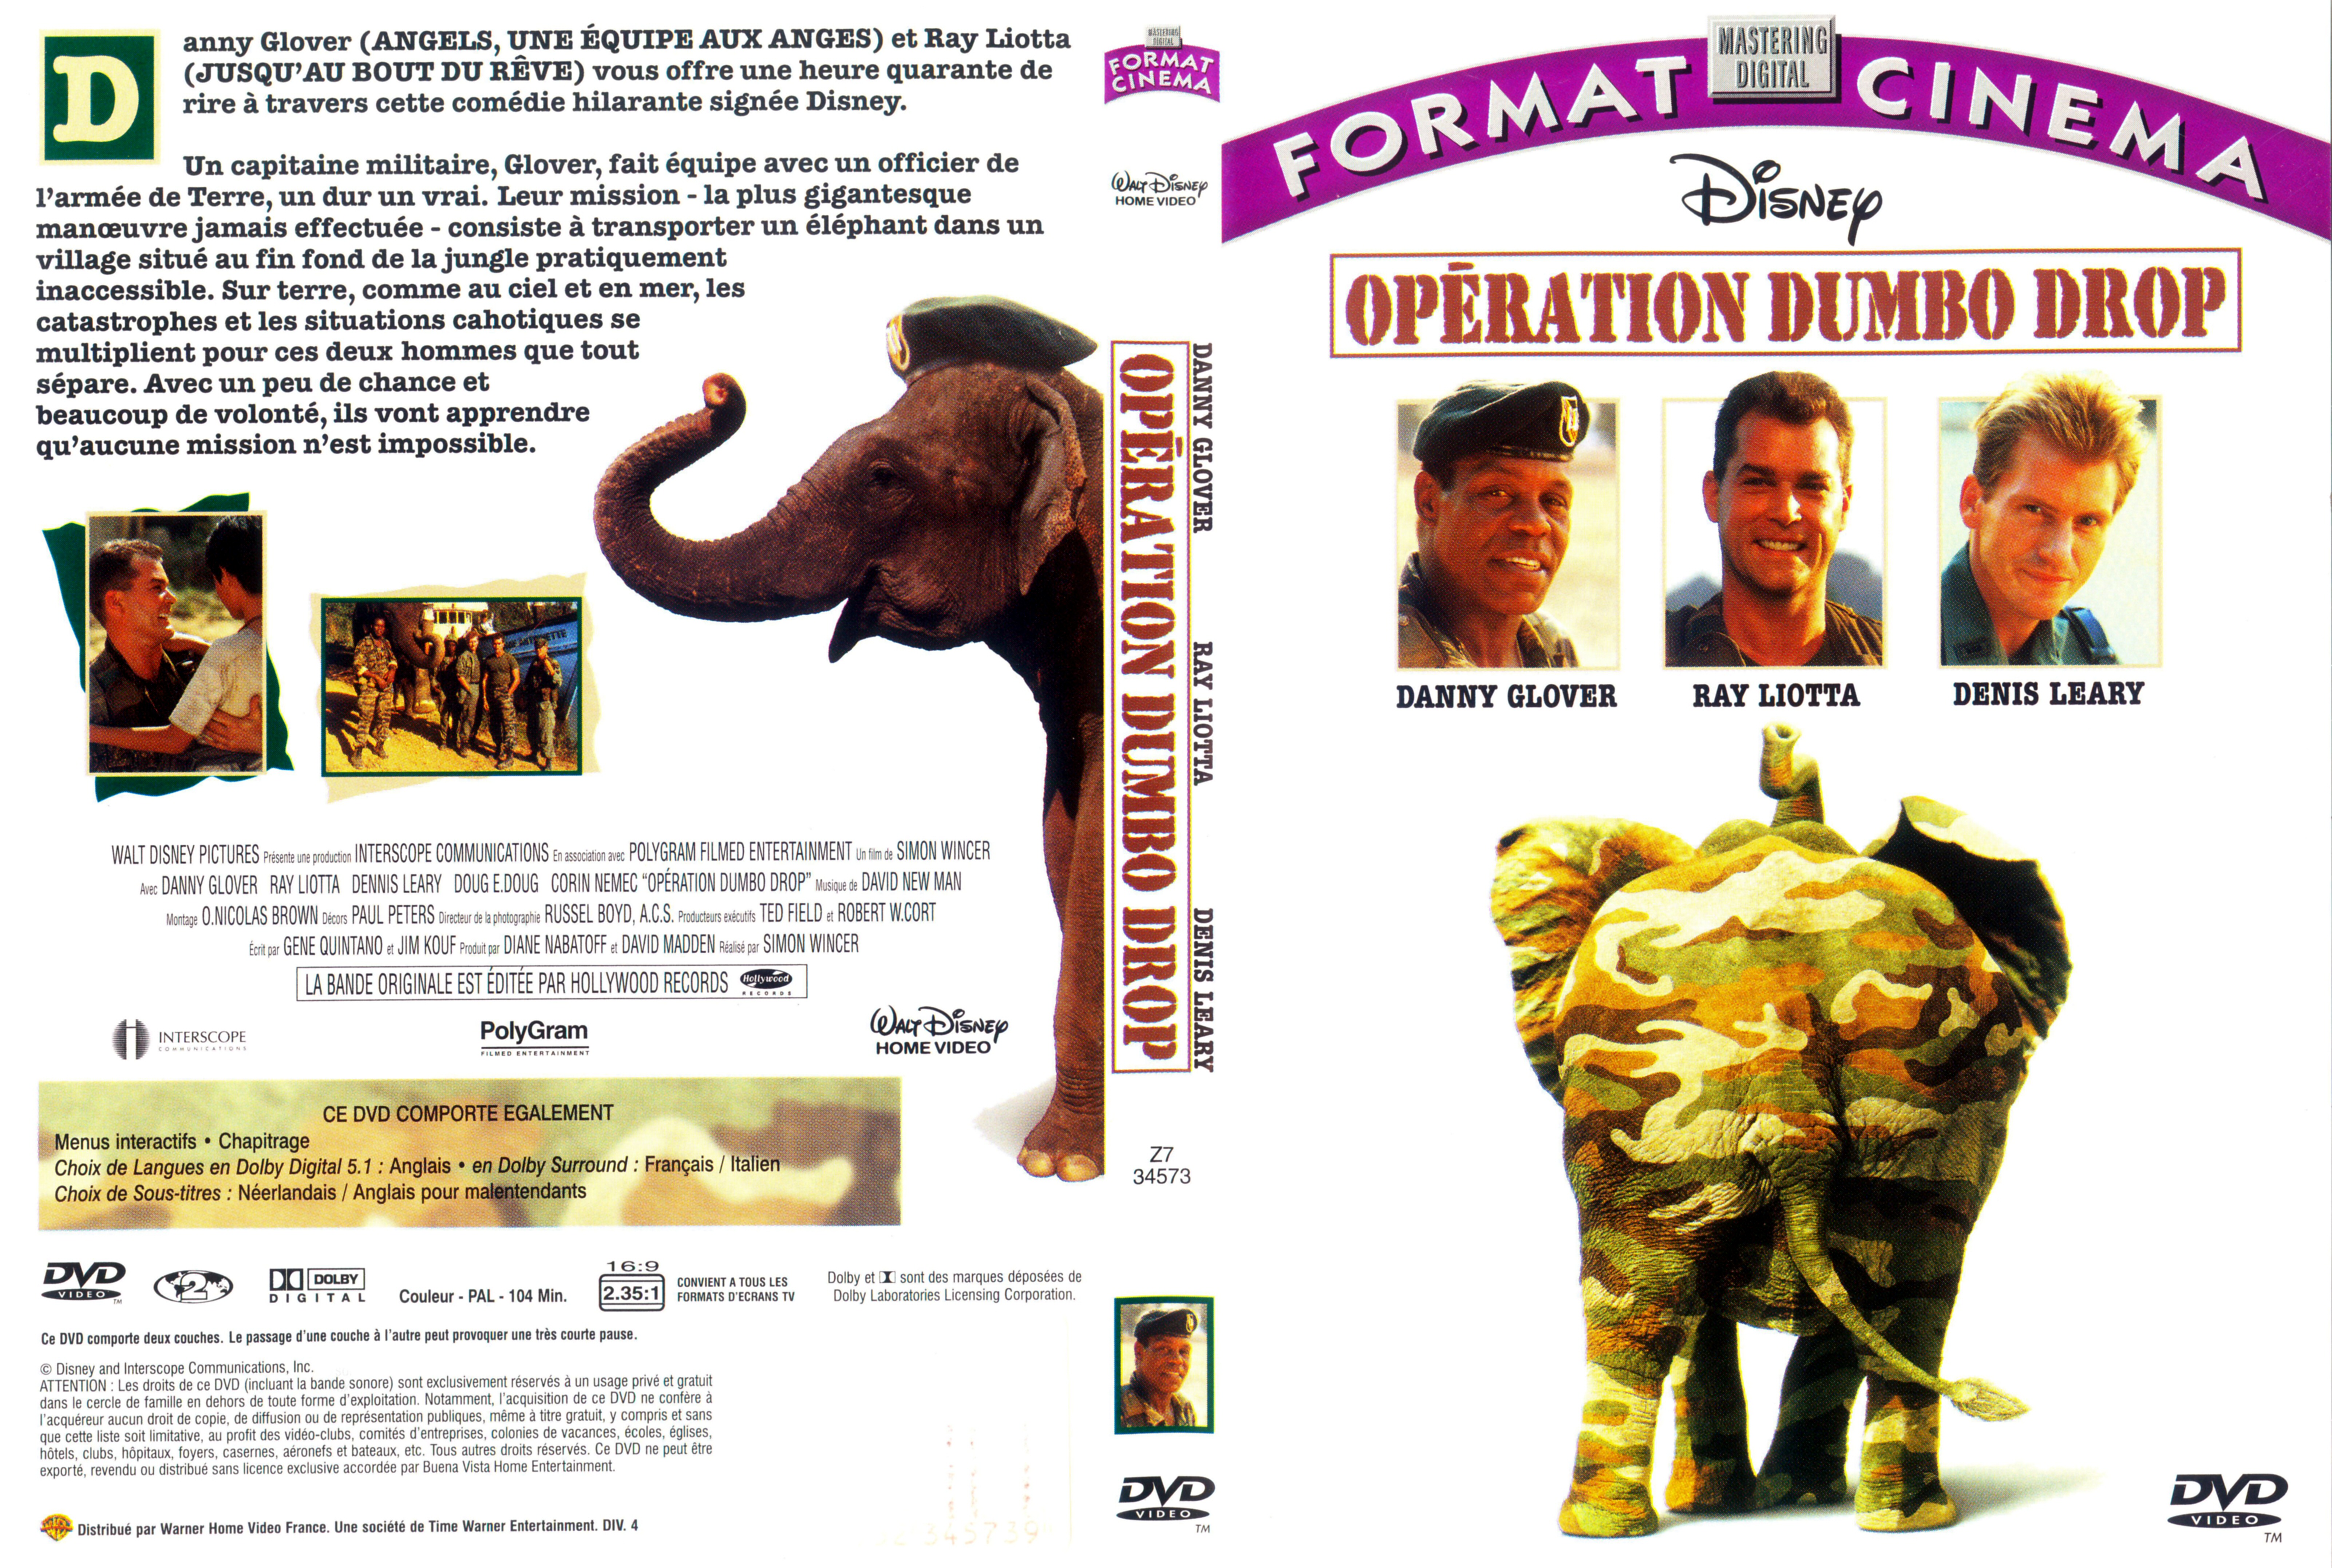 Jaquette DVD Operation dumbo drop